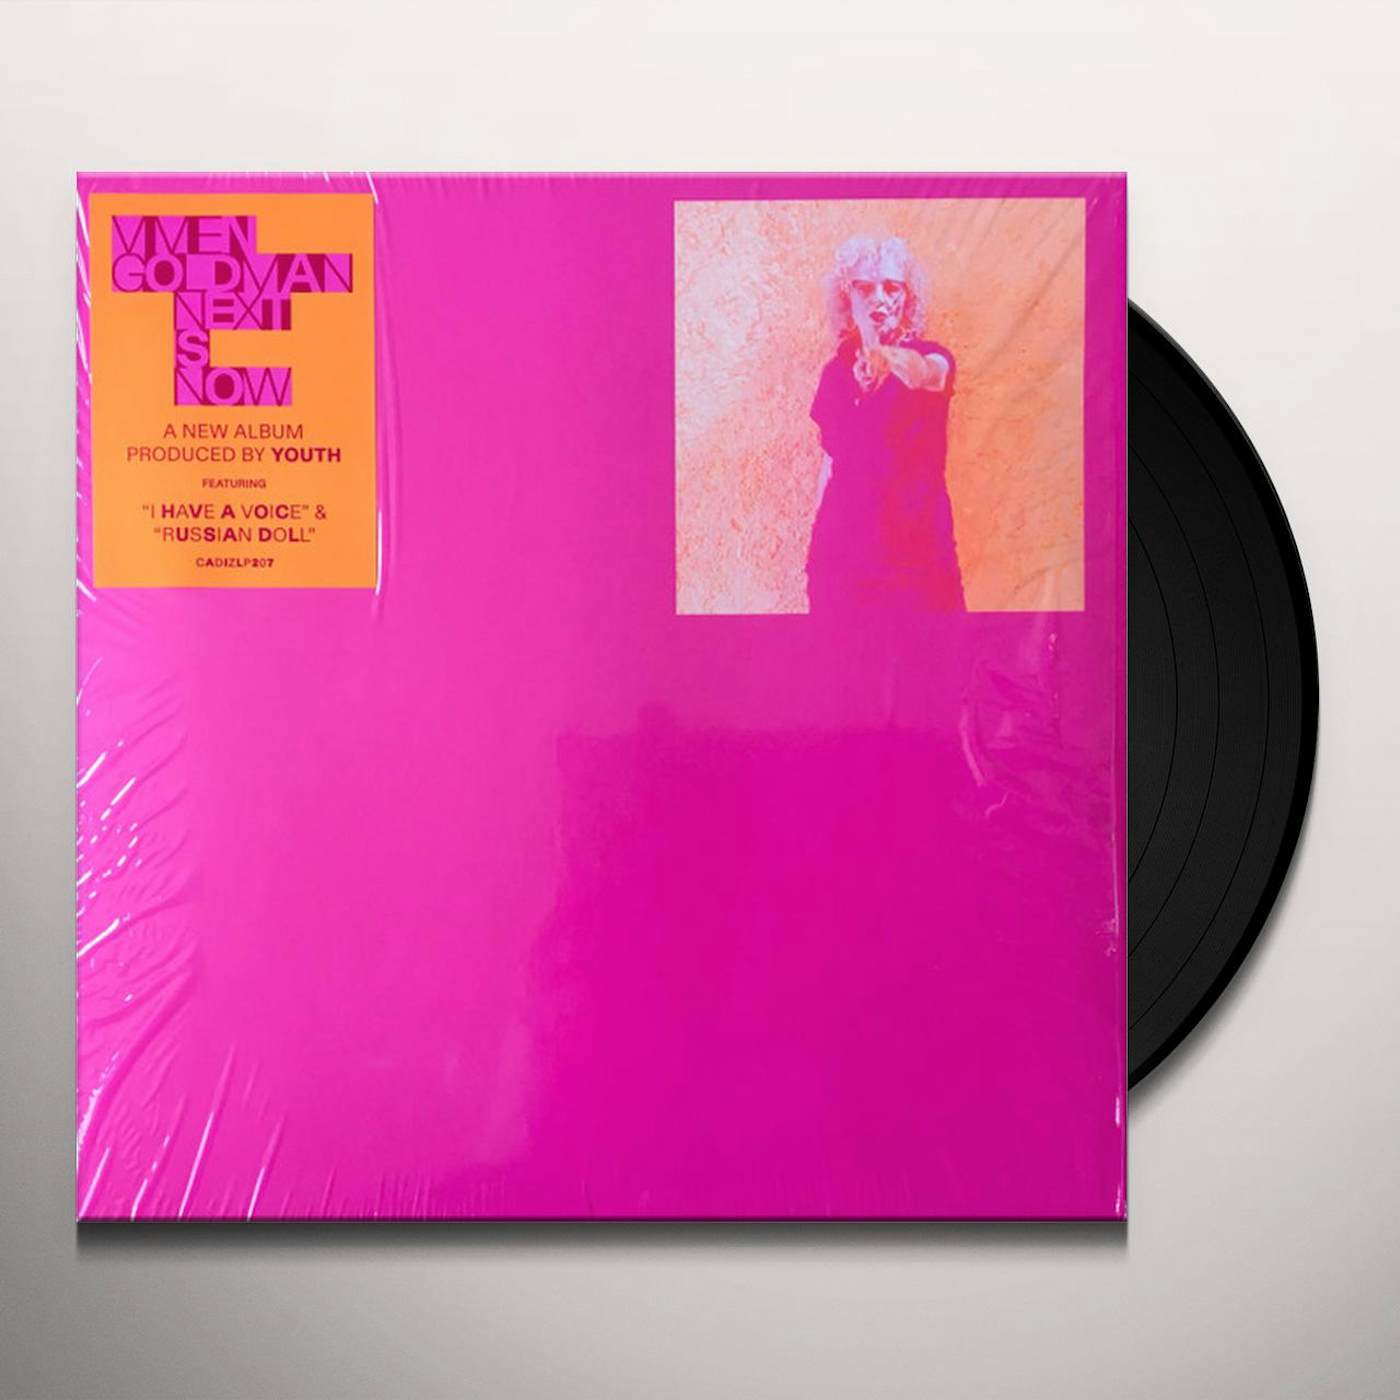 Vivien Goldman Next Is Now Vinyl Record